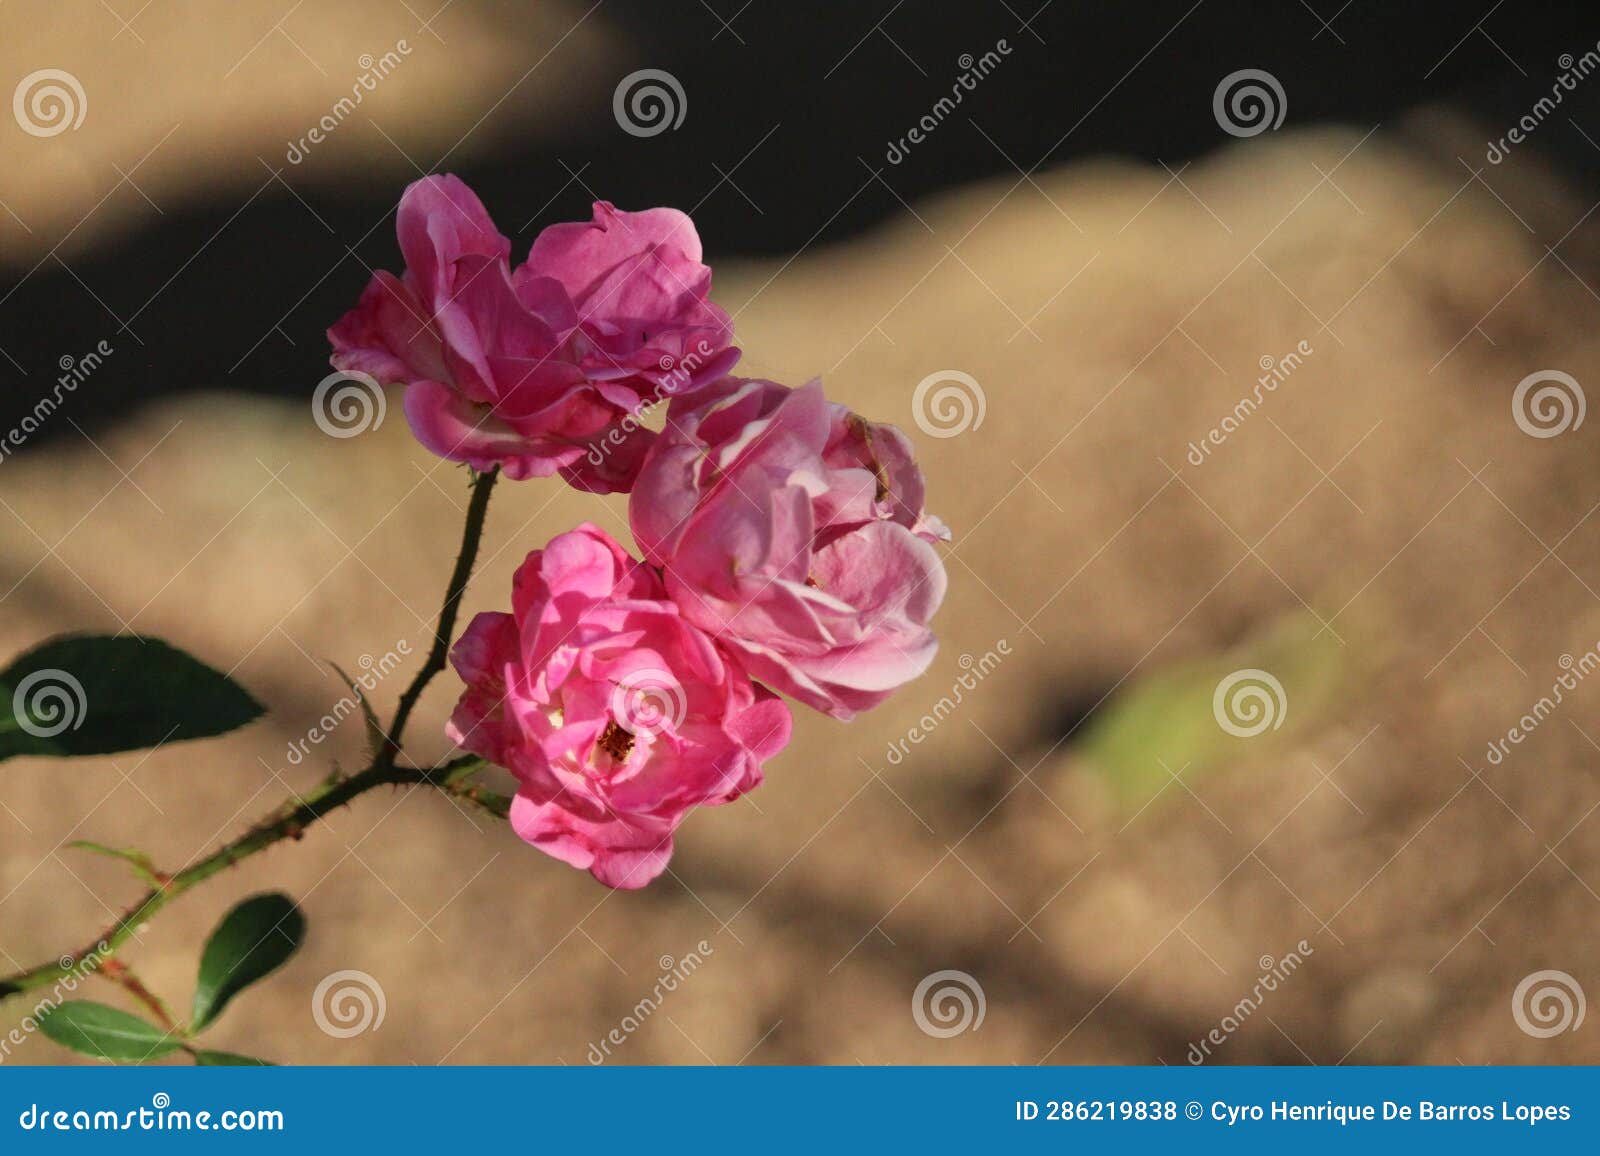 rose flowers details background,rosa,rosa rubiginosa, european species, introduced species